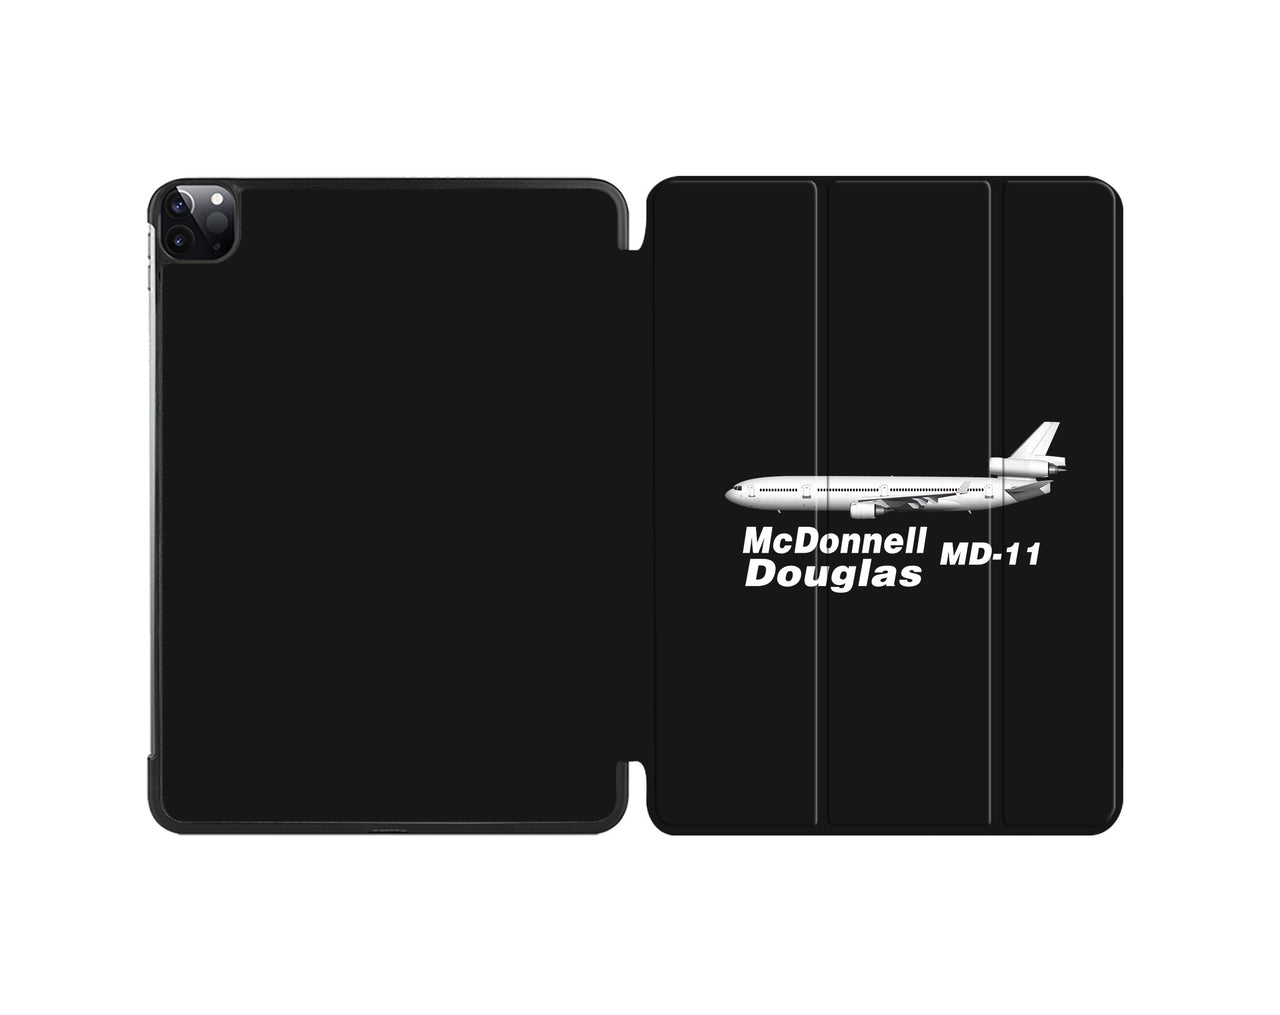 The McDonnell Douglas MD-11 Douglas F18 Designed iPad Cases